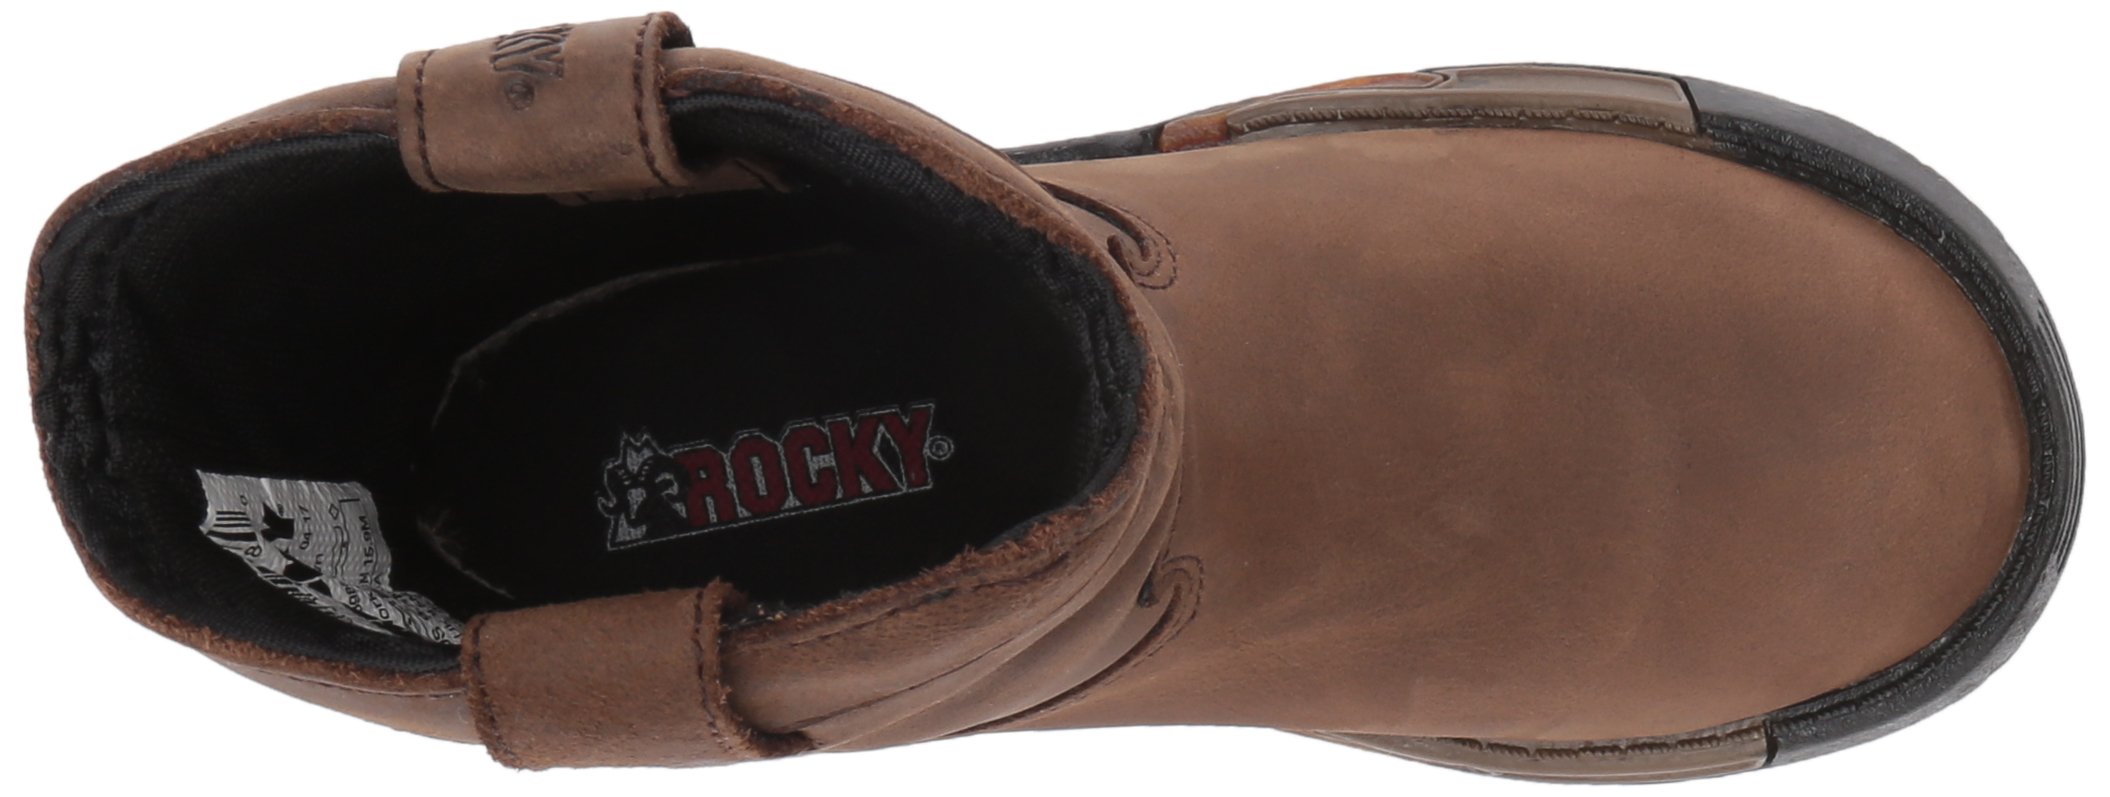 Rocky Unisex-Child Fq0003638 Mid Calf Boot